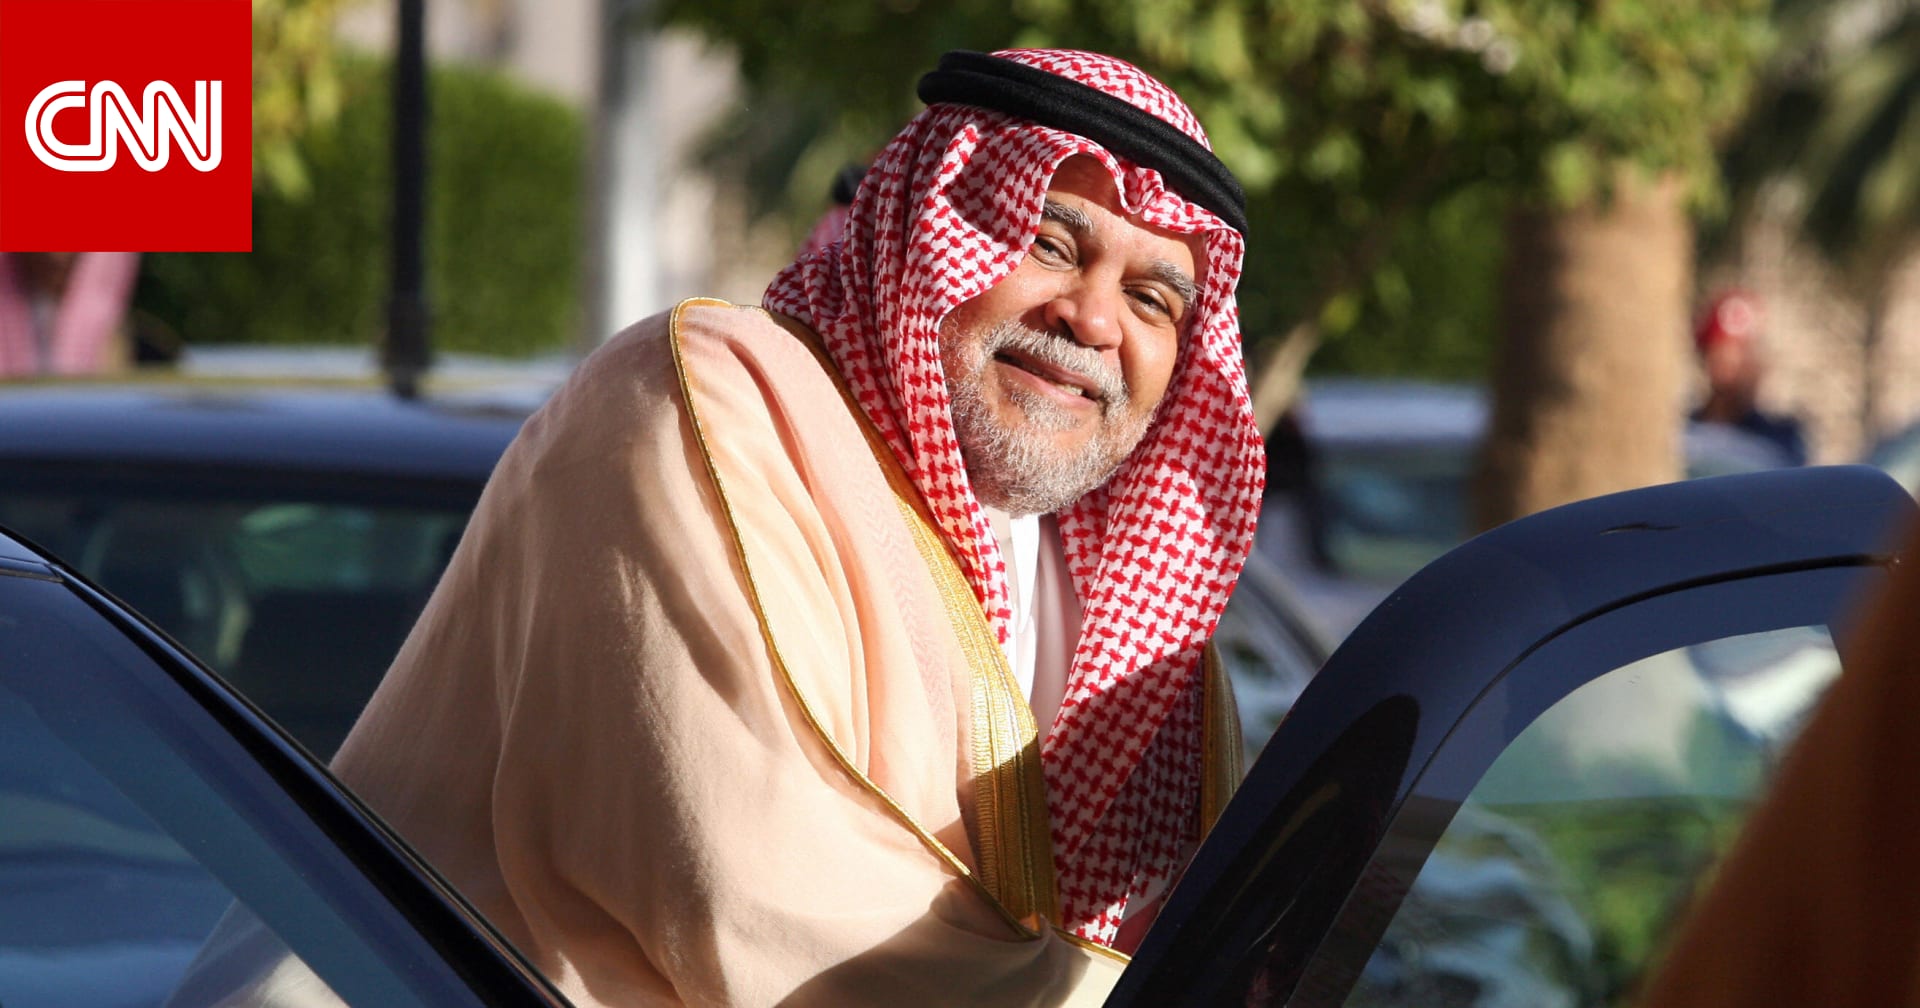 Title: “Prince Bandar bin Sultan’s Statement on Saudi Crown Prince’s Interview with Fox News Revealed by Prince Abdul Rahman bin Musaed”